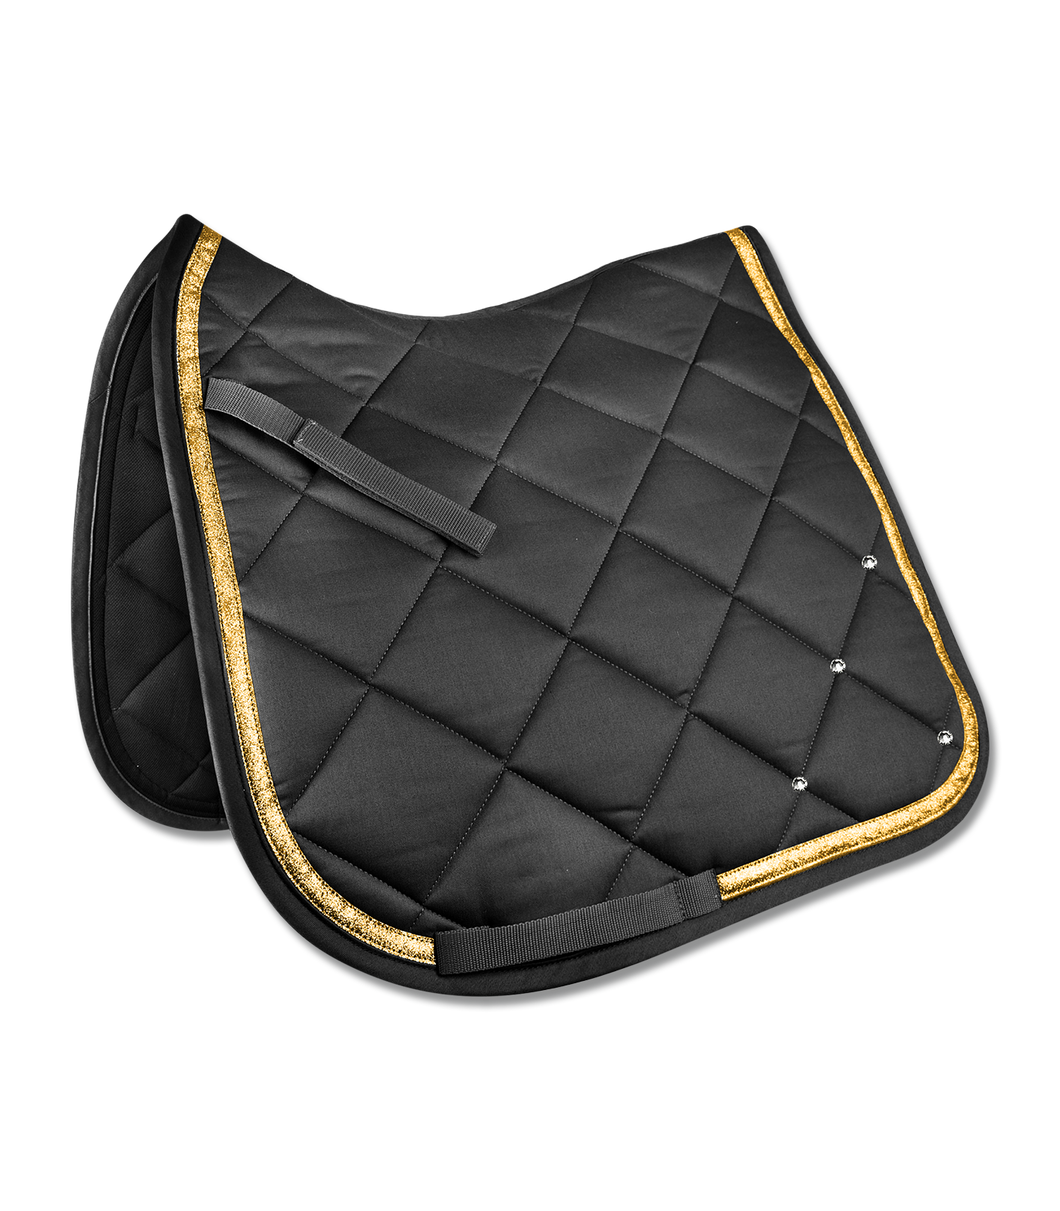 Black and gold saddle pad w